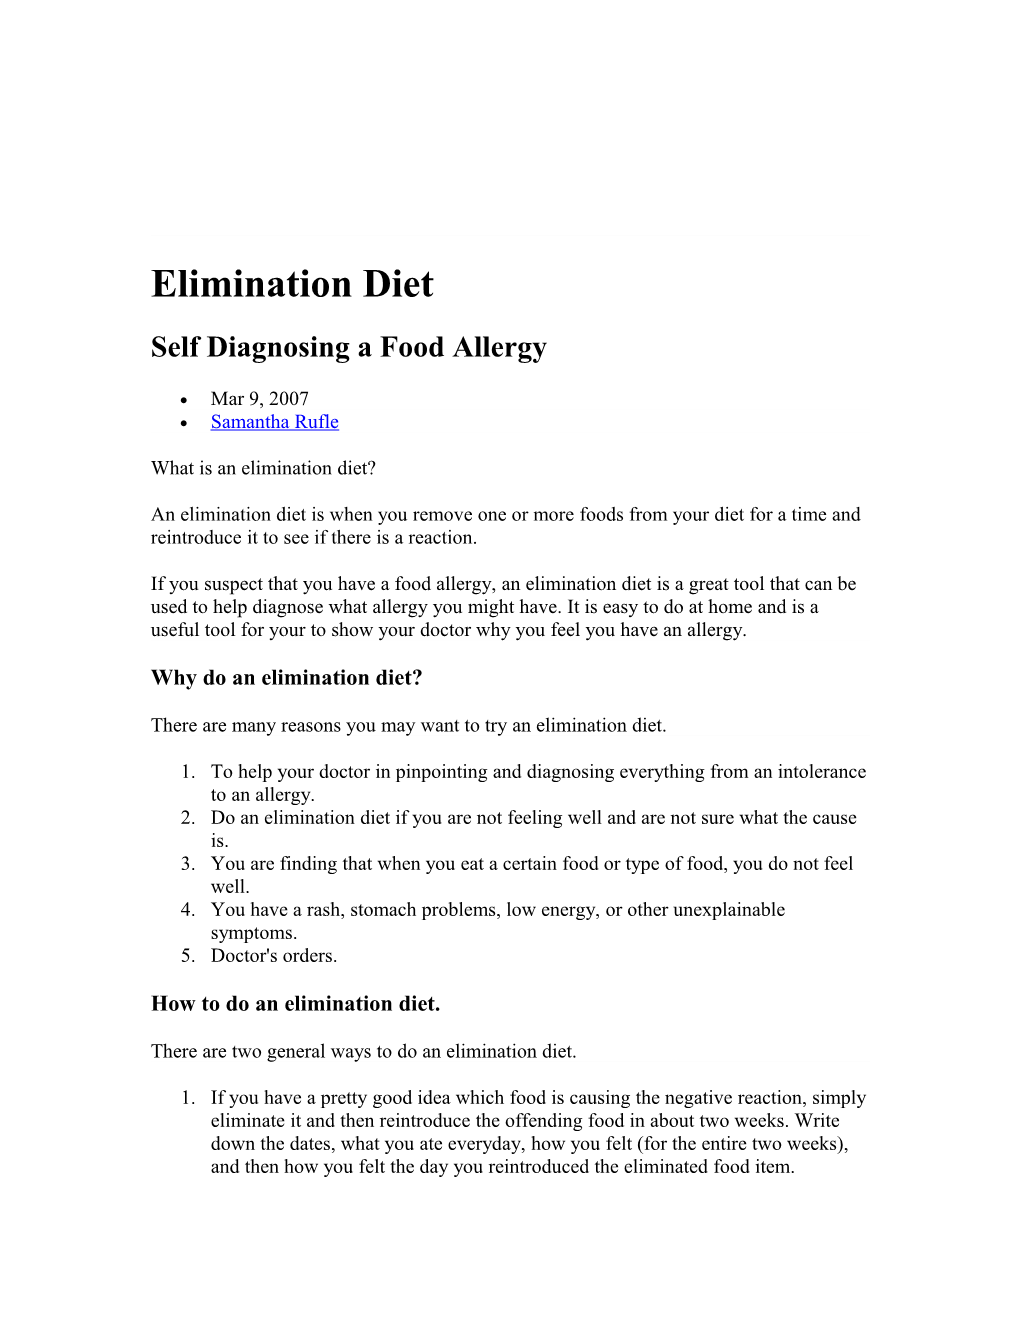 Self Diagnosing a Food Allergy